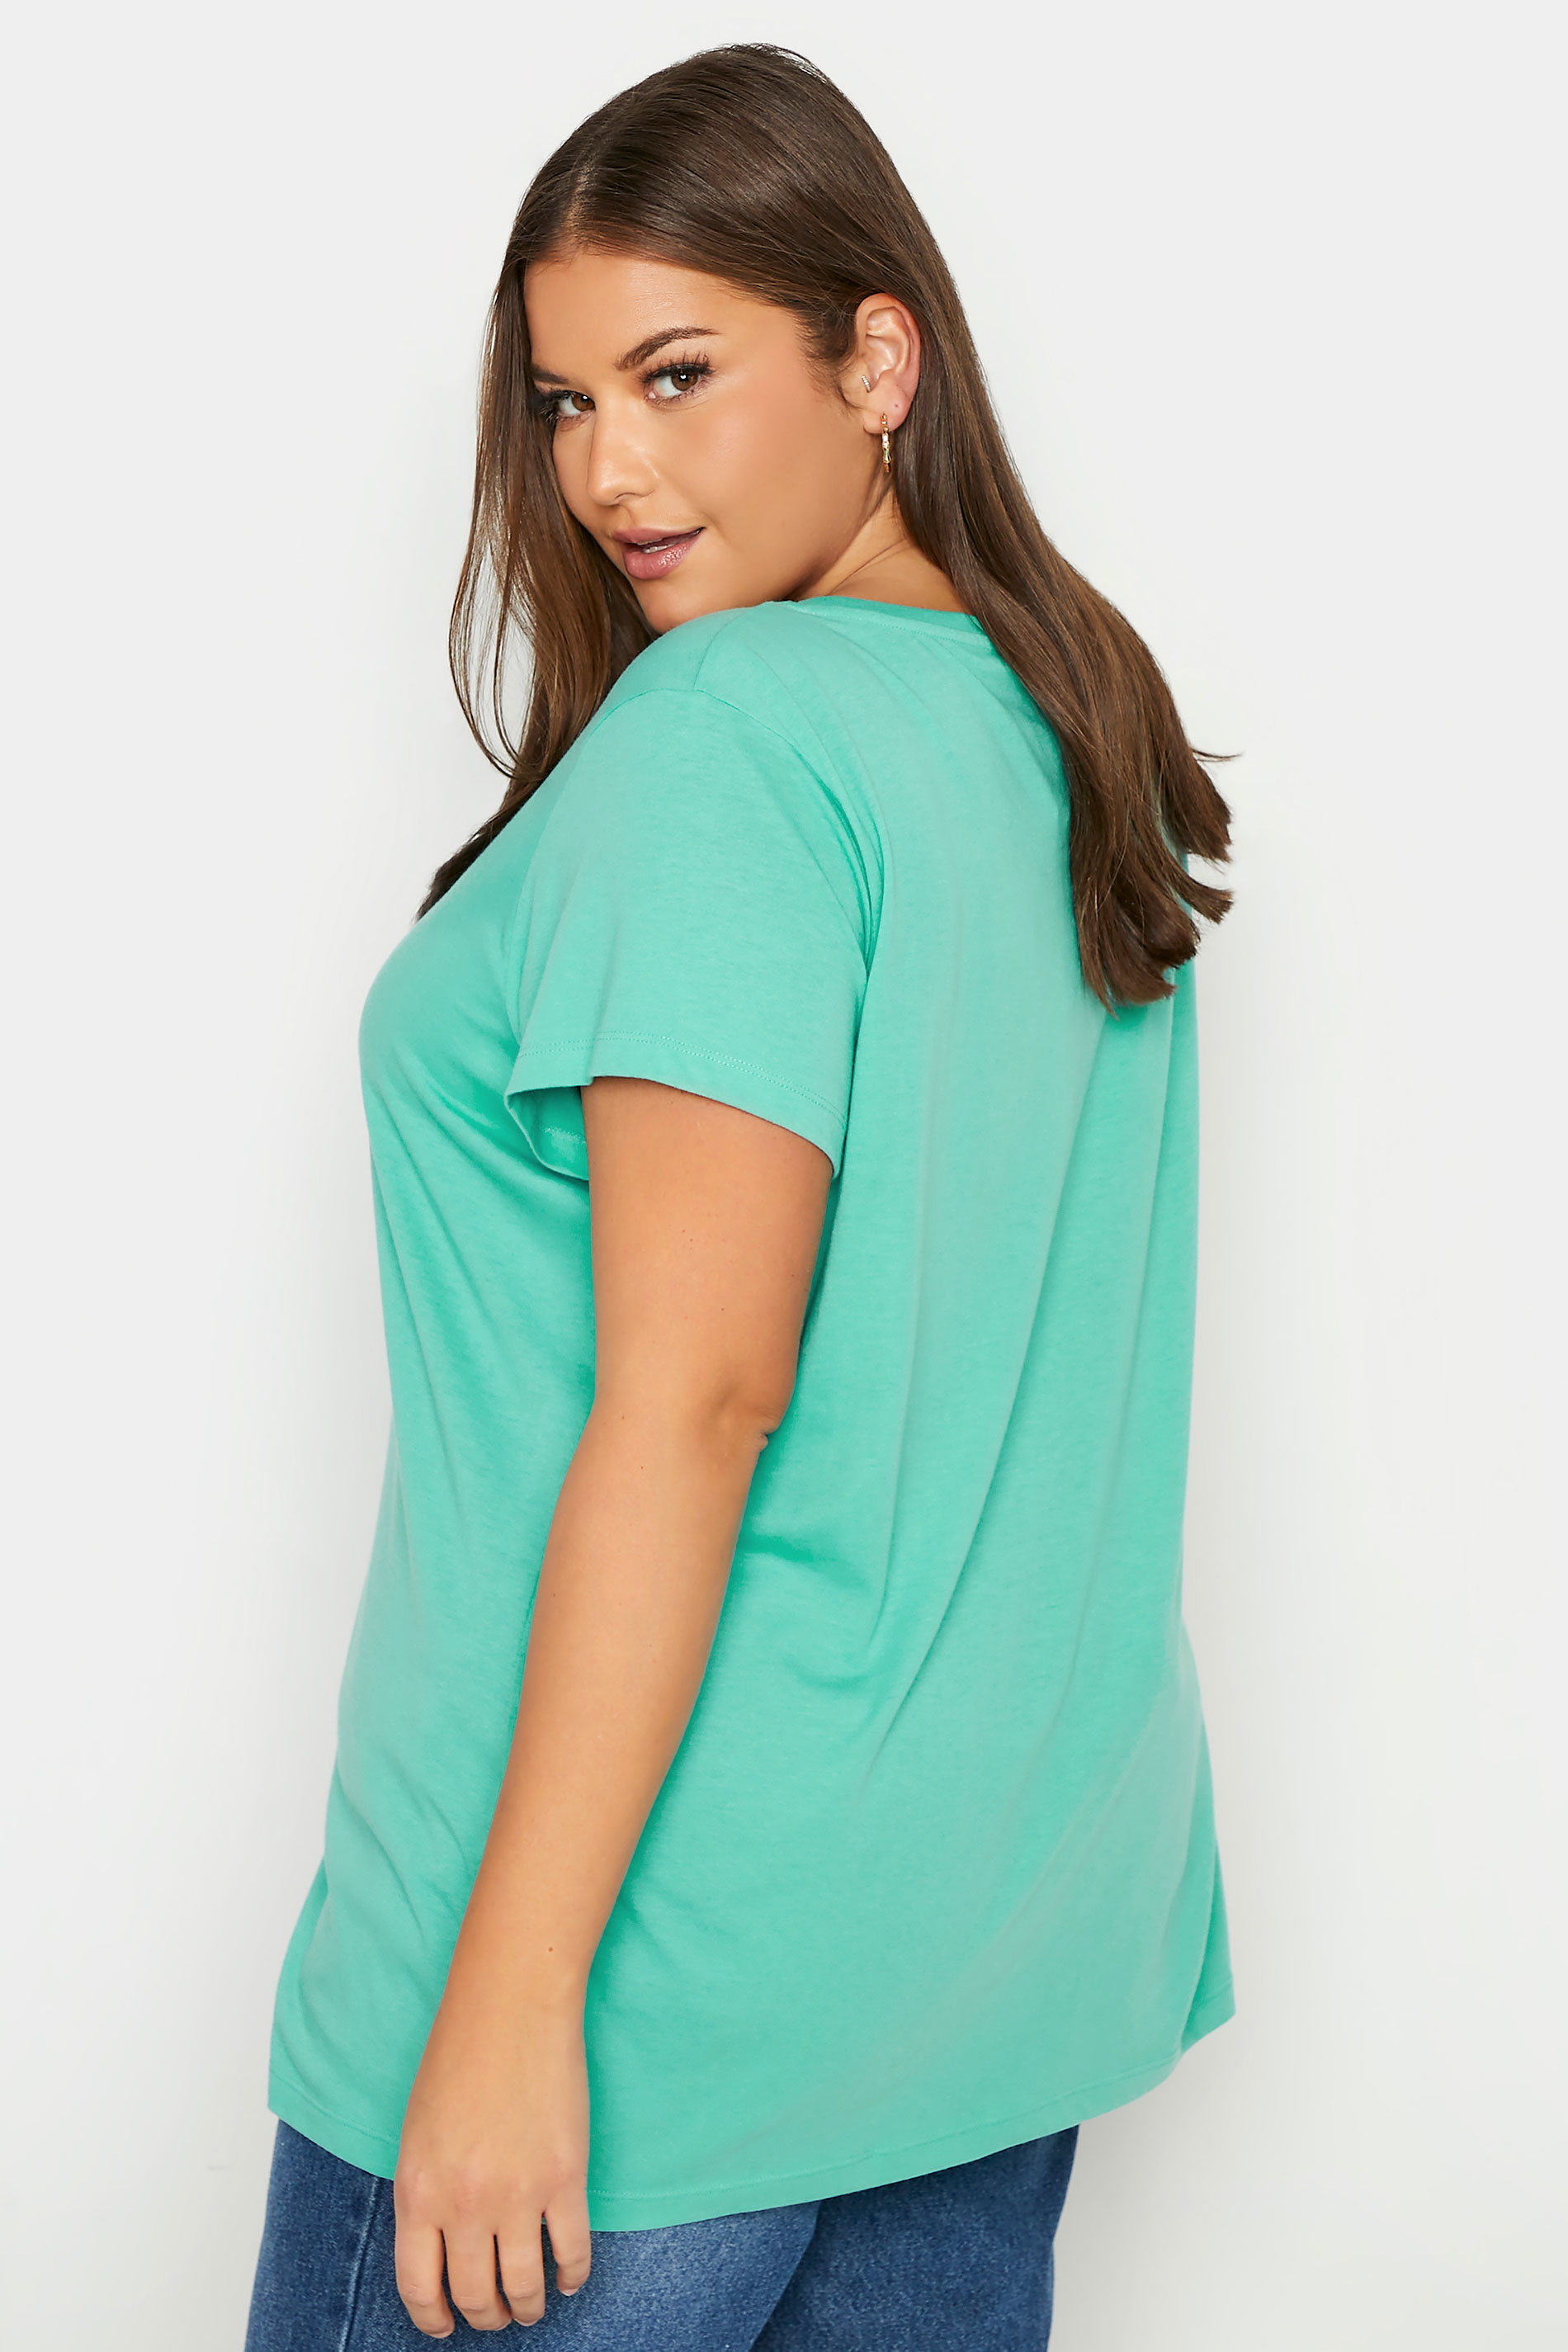 Grande taille  Tops Grande taille  T-Shirts Basiques & Débardeurs | T-Shirt Bleu Turquoise en Jersey - NW57273